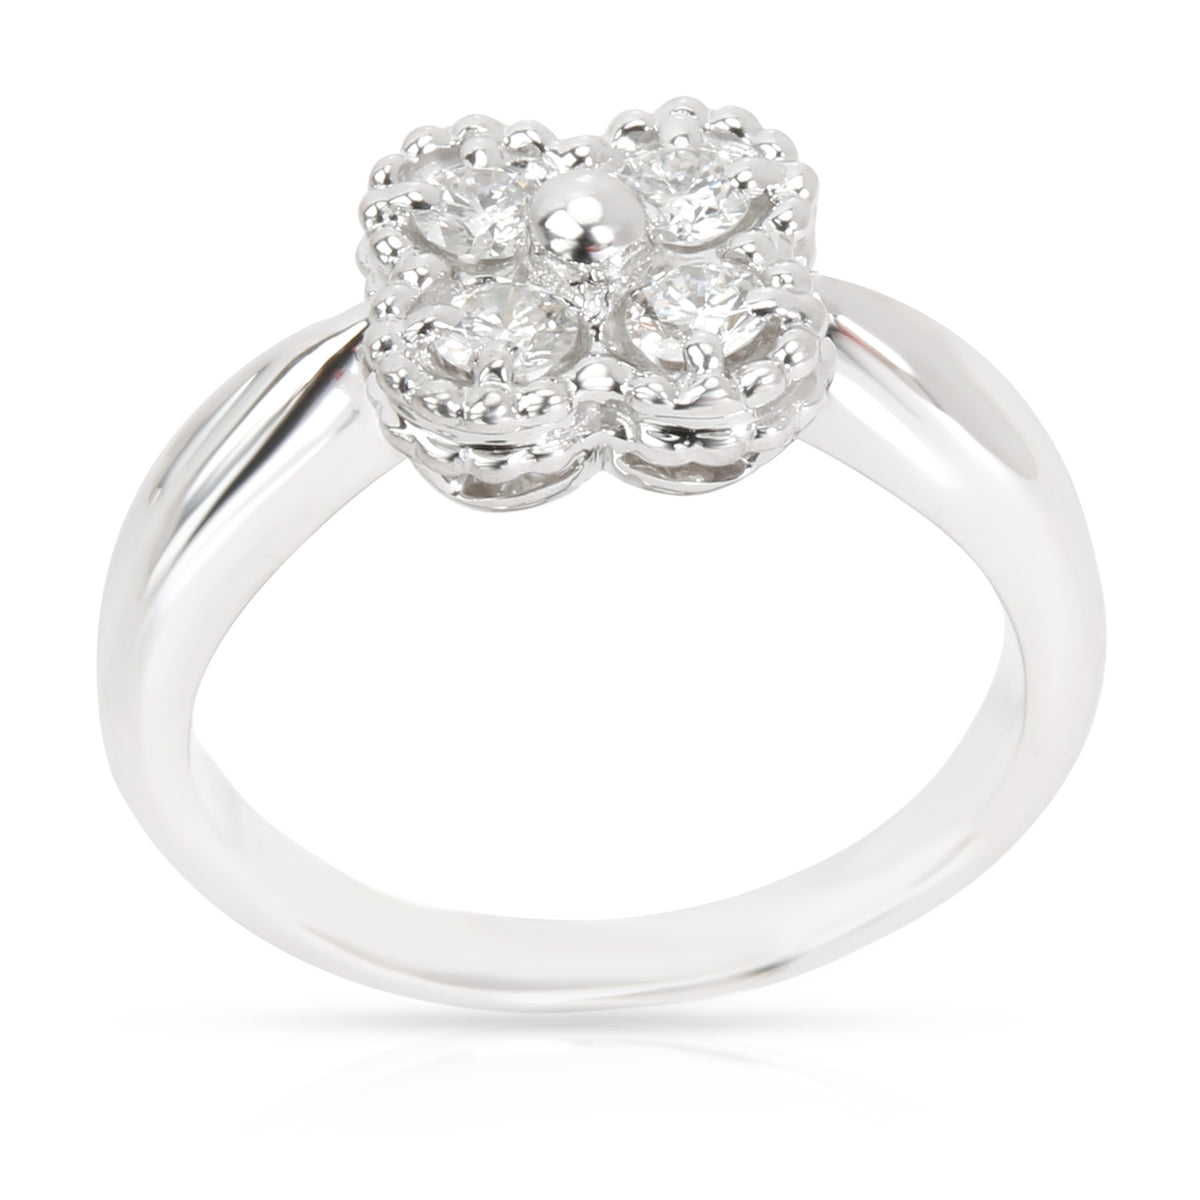 Van Cleef & Arpels Vintage Alhambra Diamond Ring in 18K White Gold (0.40 CTW)